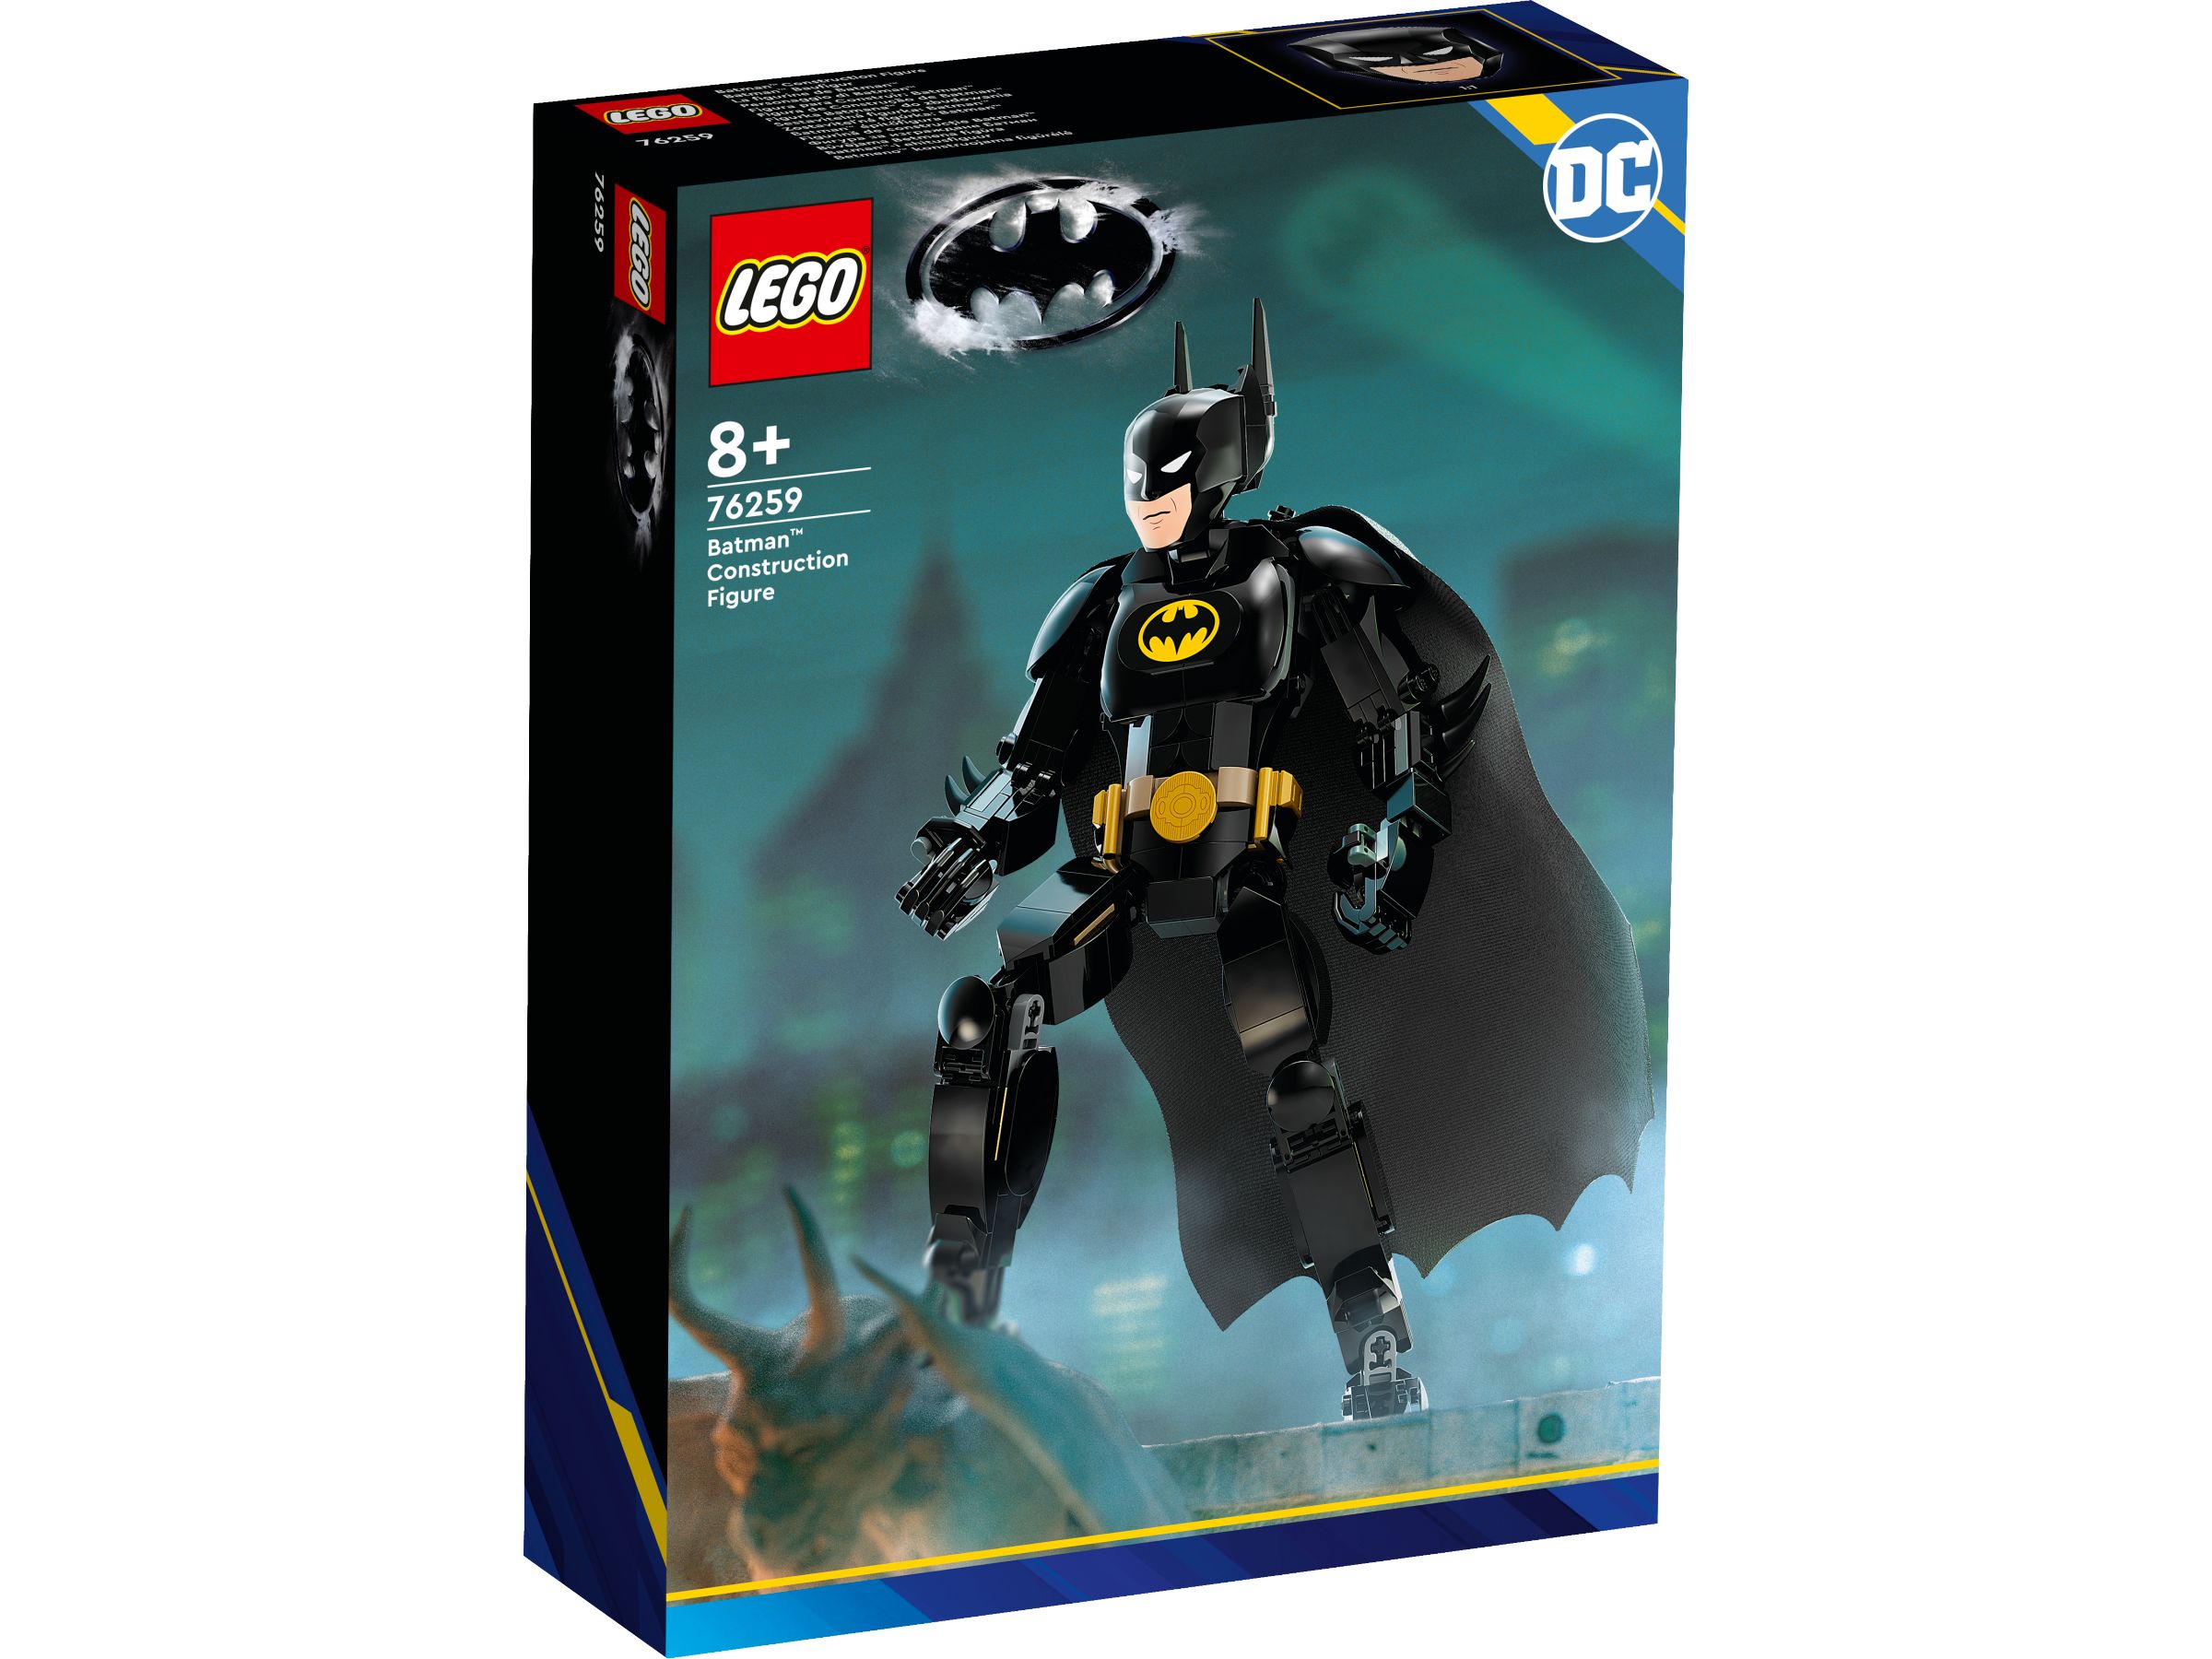 LEGO Super Heroes 76259 Batman™ Baufigur LEGO_76259_Box1_v29.jpg